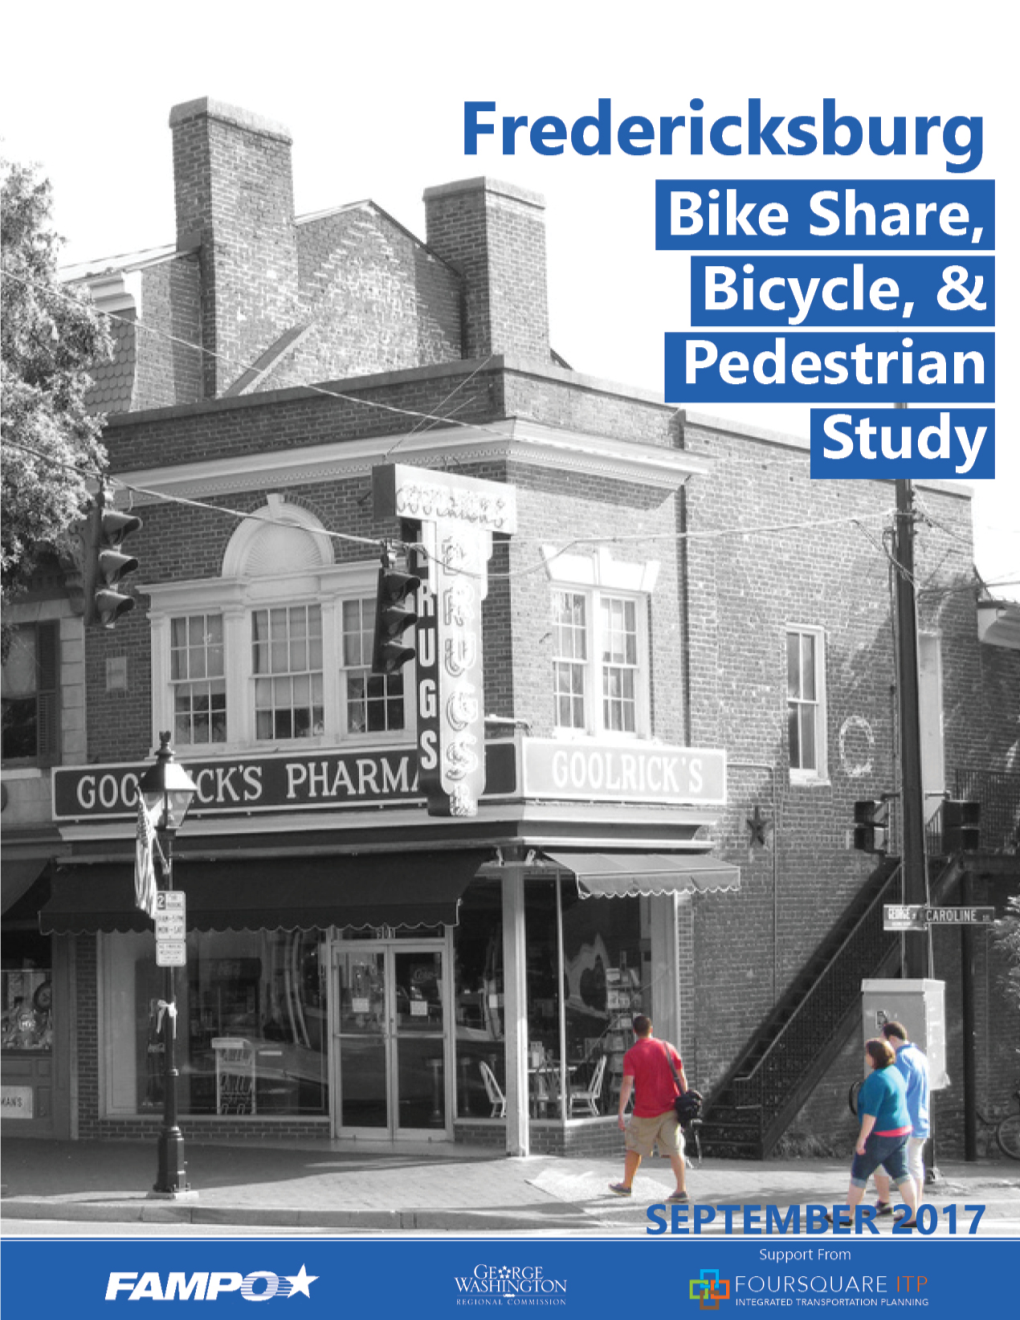 2017 FAMPO Study, Fredericksburg Bike Share, Bicycle, & Pedestrian